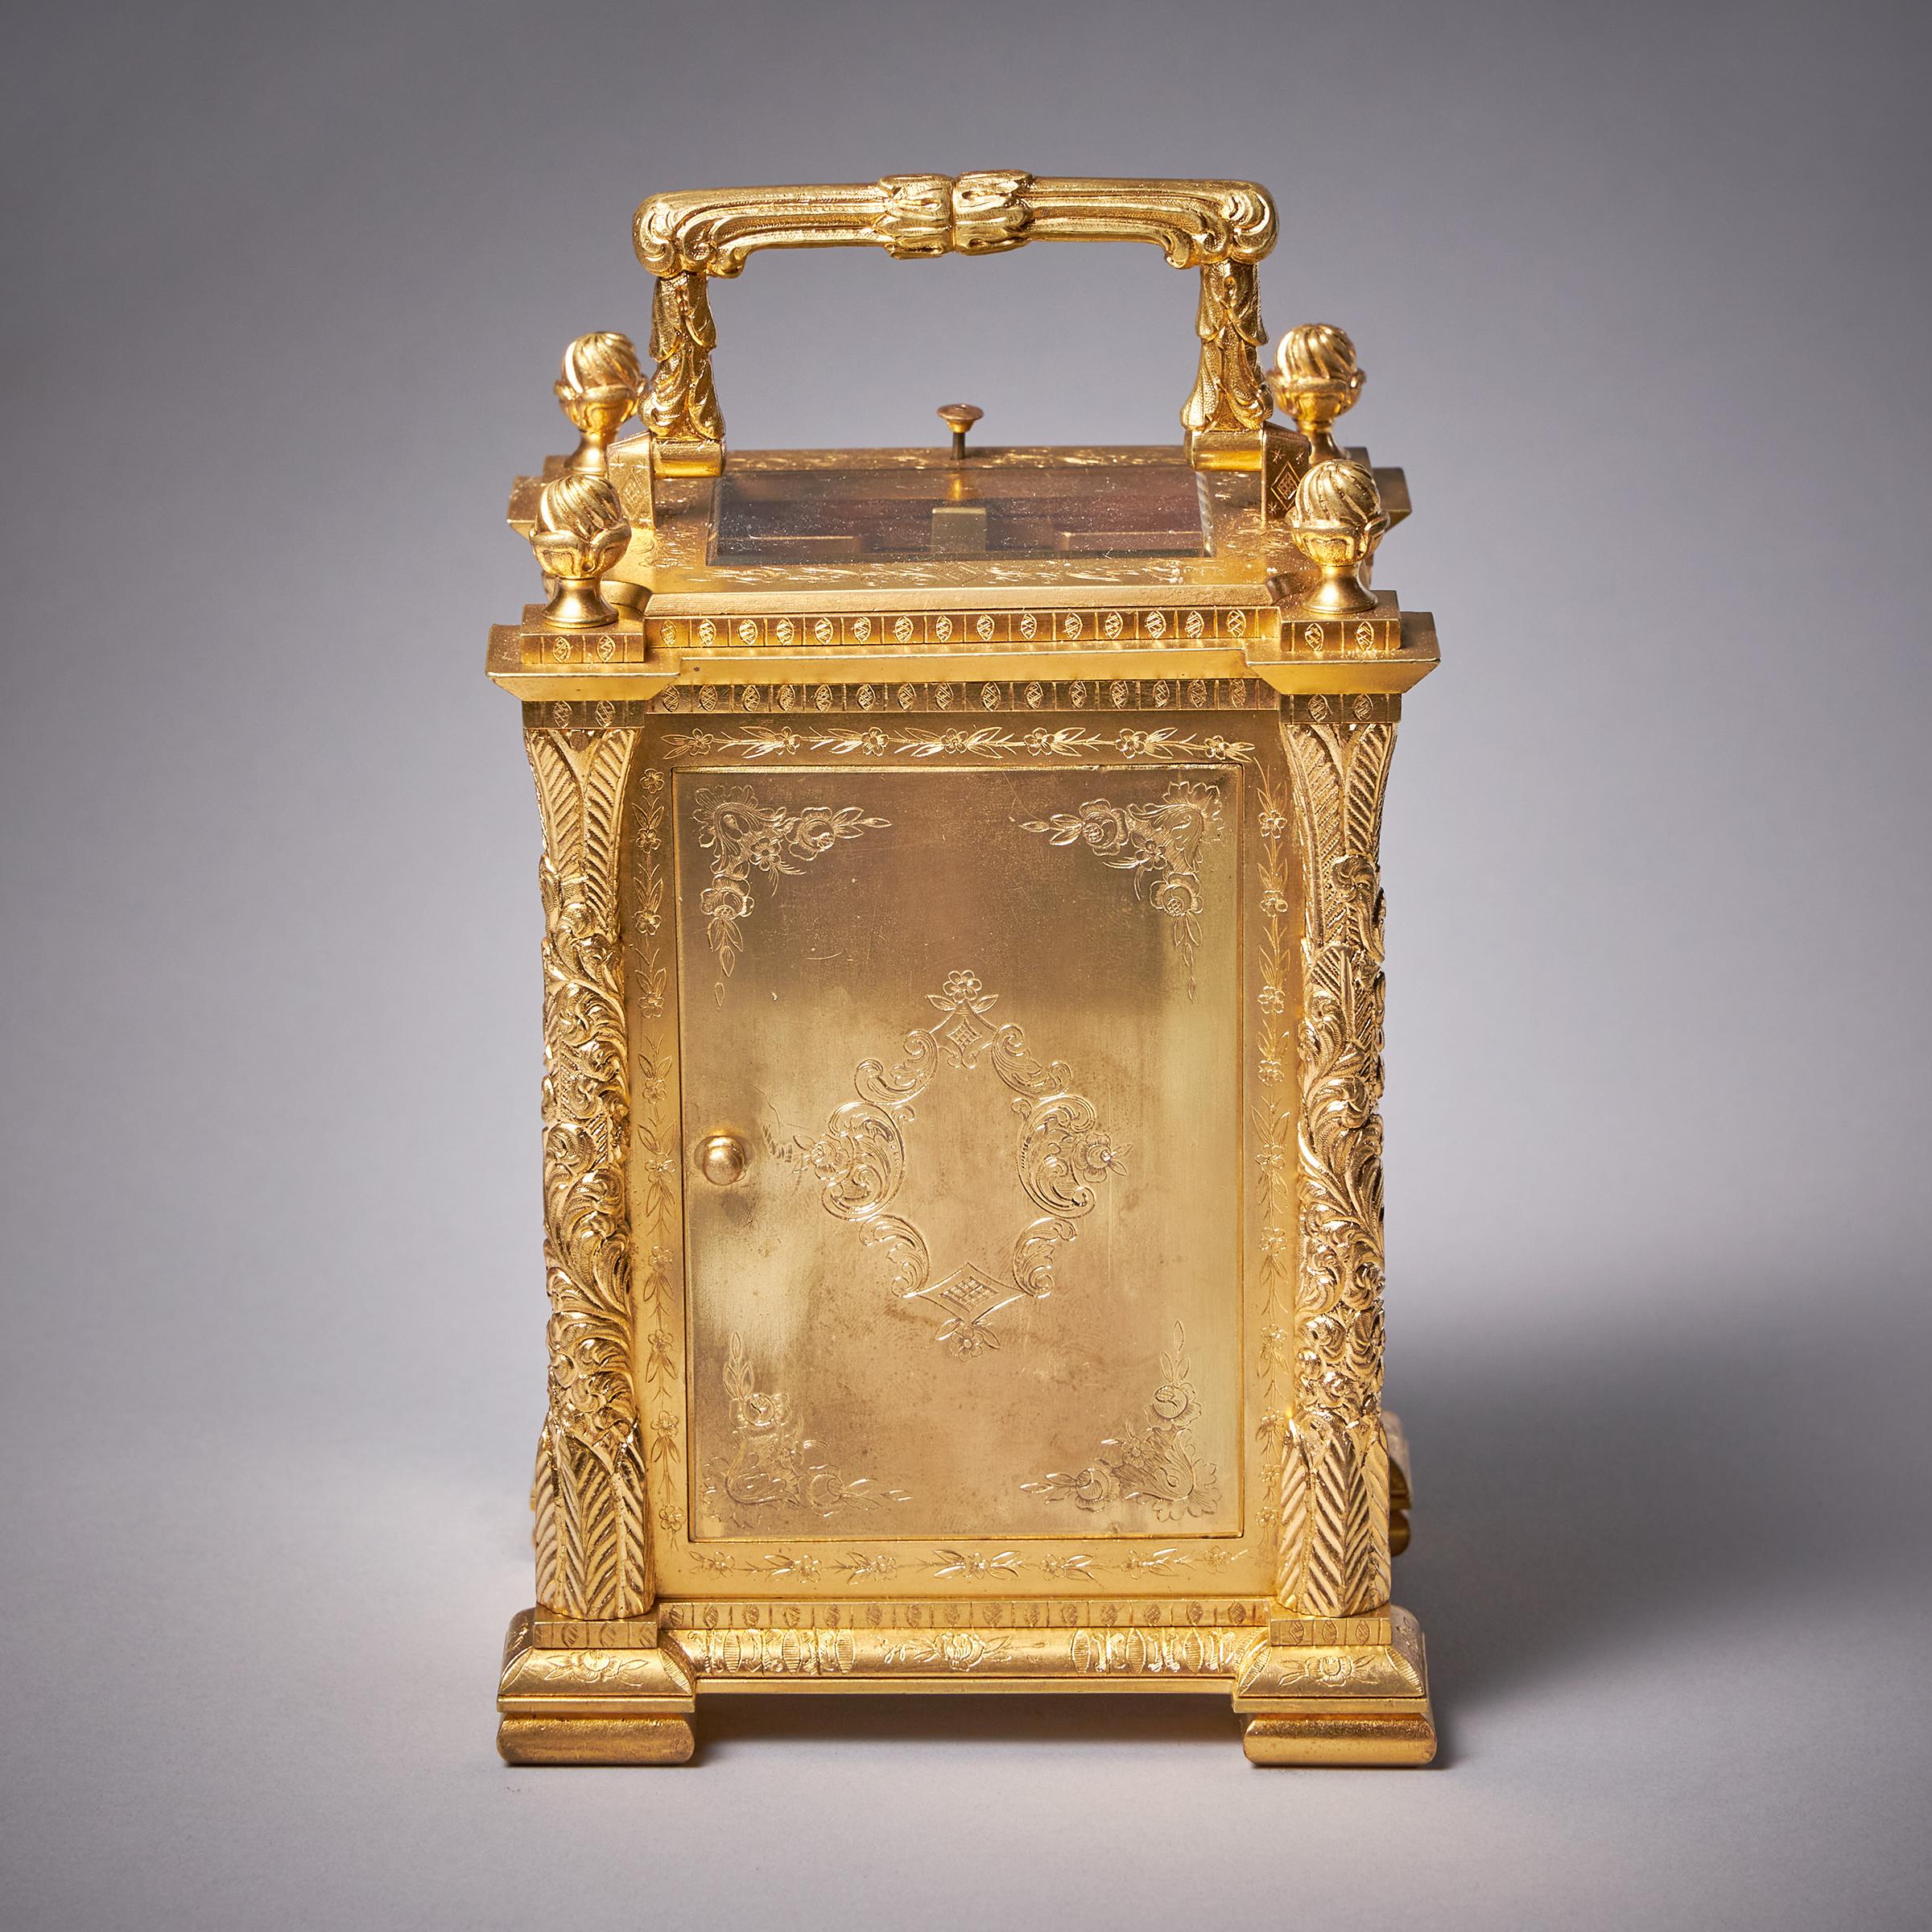 19th Century Eight Day Gilt Brass Carriage Clock with Alarm by Orange, Paris 4